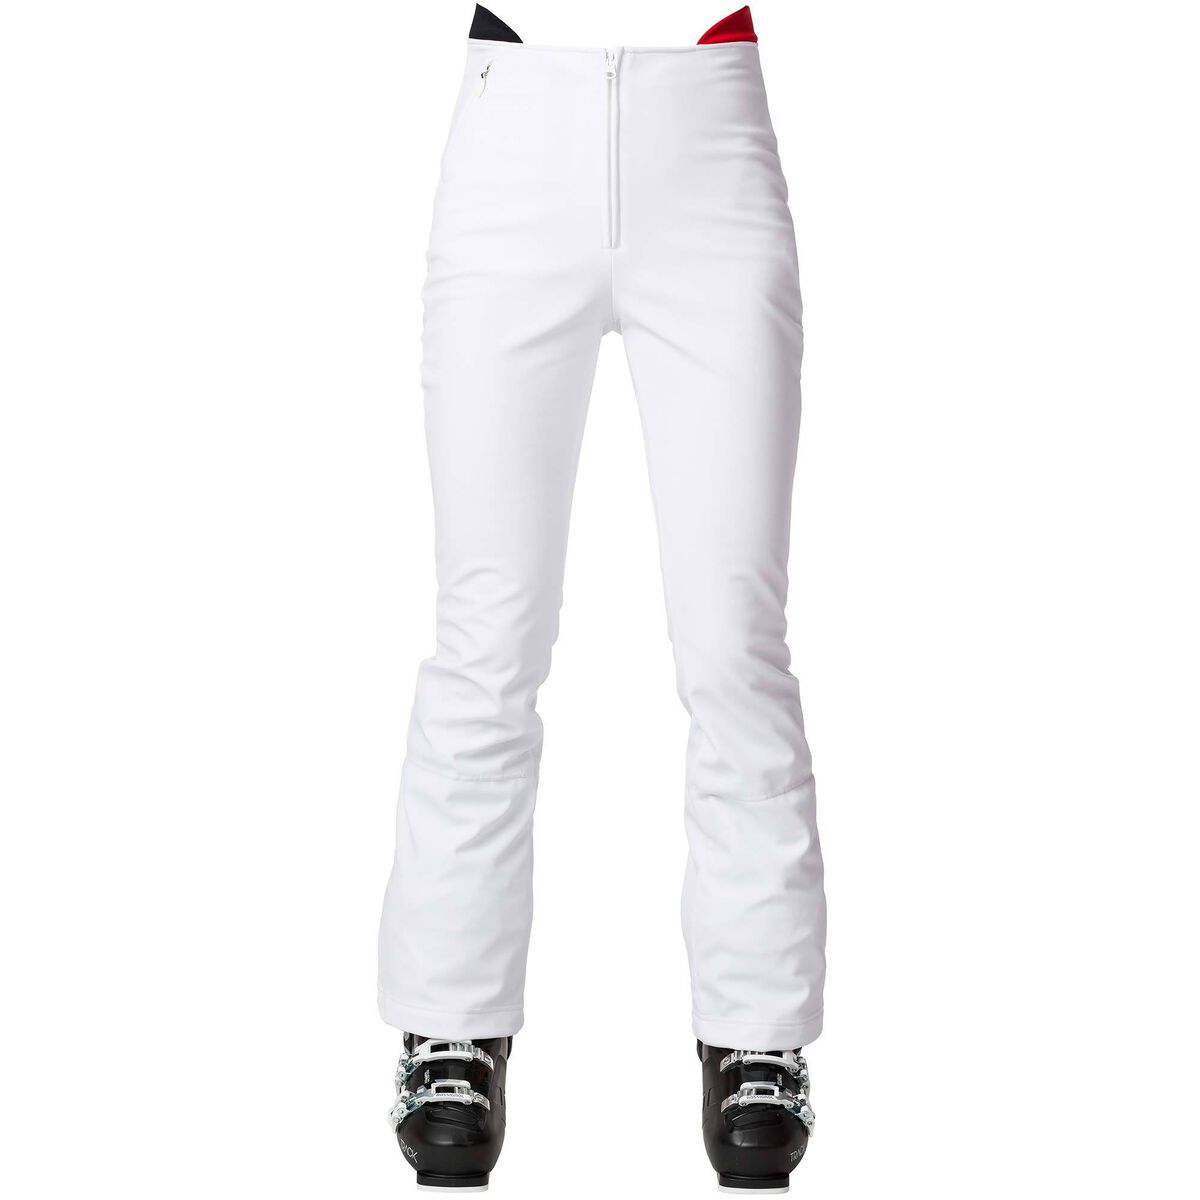 Julien Macdonald - Women's Regimented Ski Trousers White